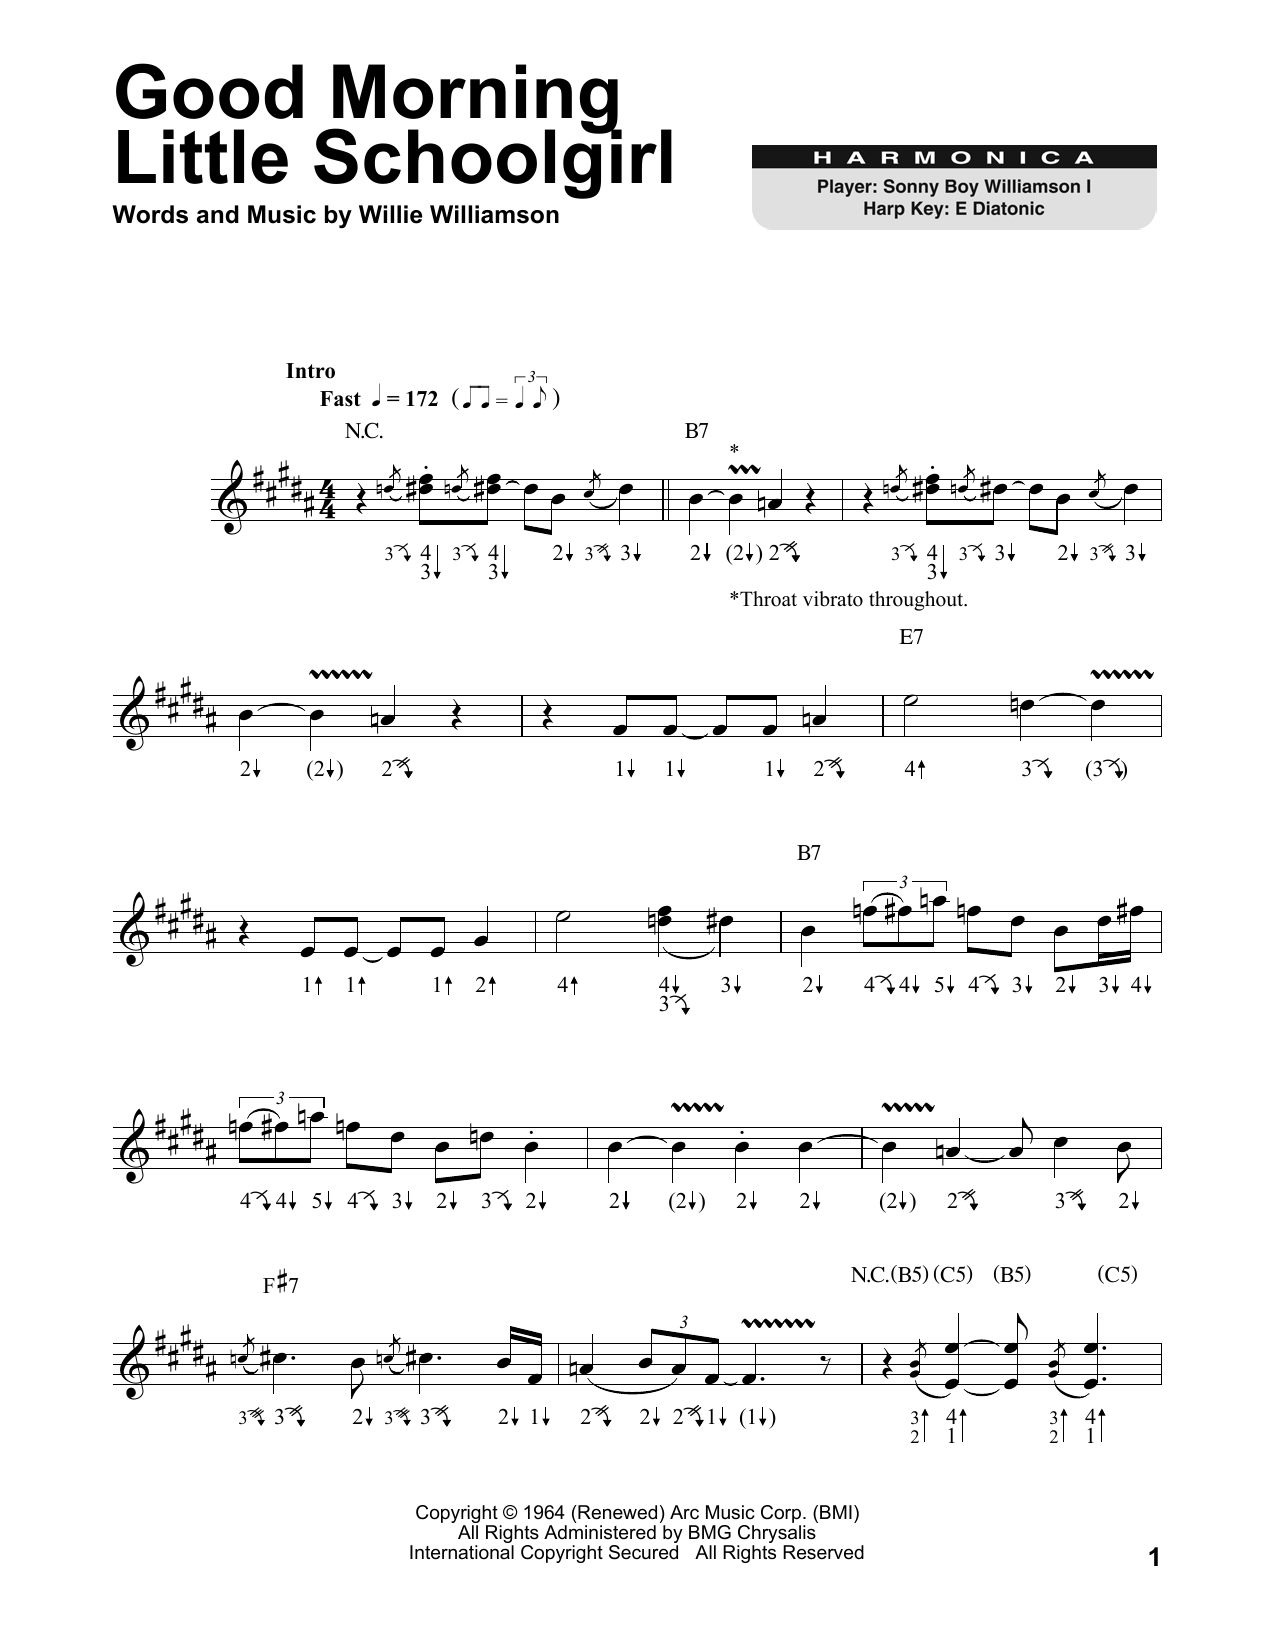 Sonny Boy Williamson Good Morning Little Schoolgirl sheet music notes and chords arranged for Harmonica